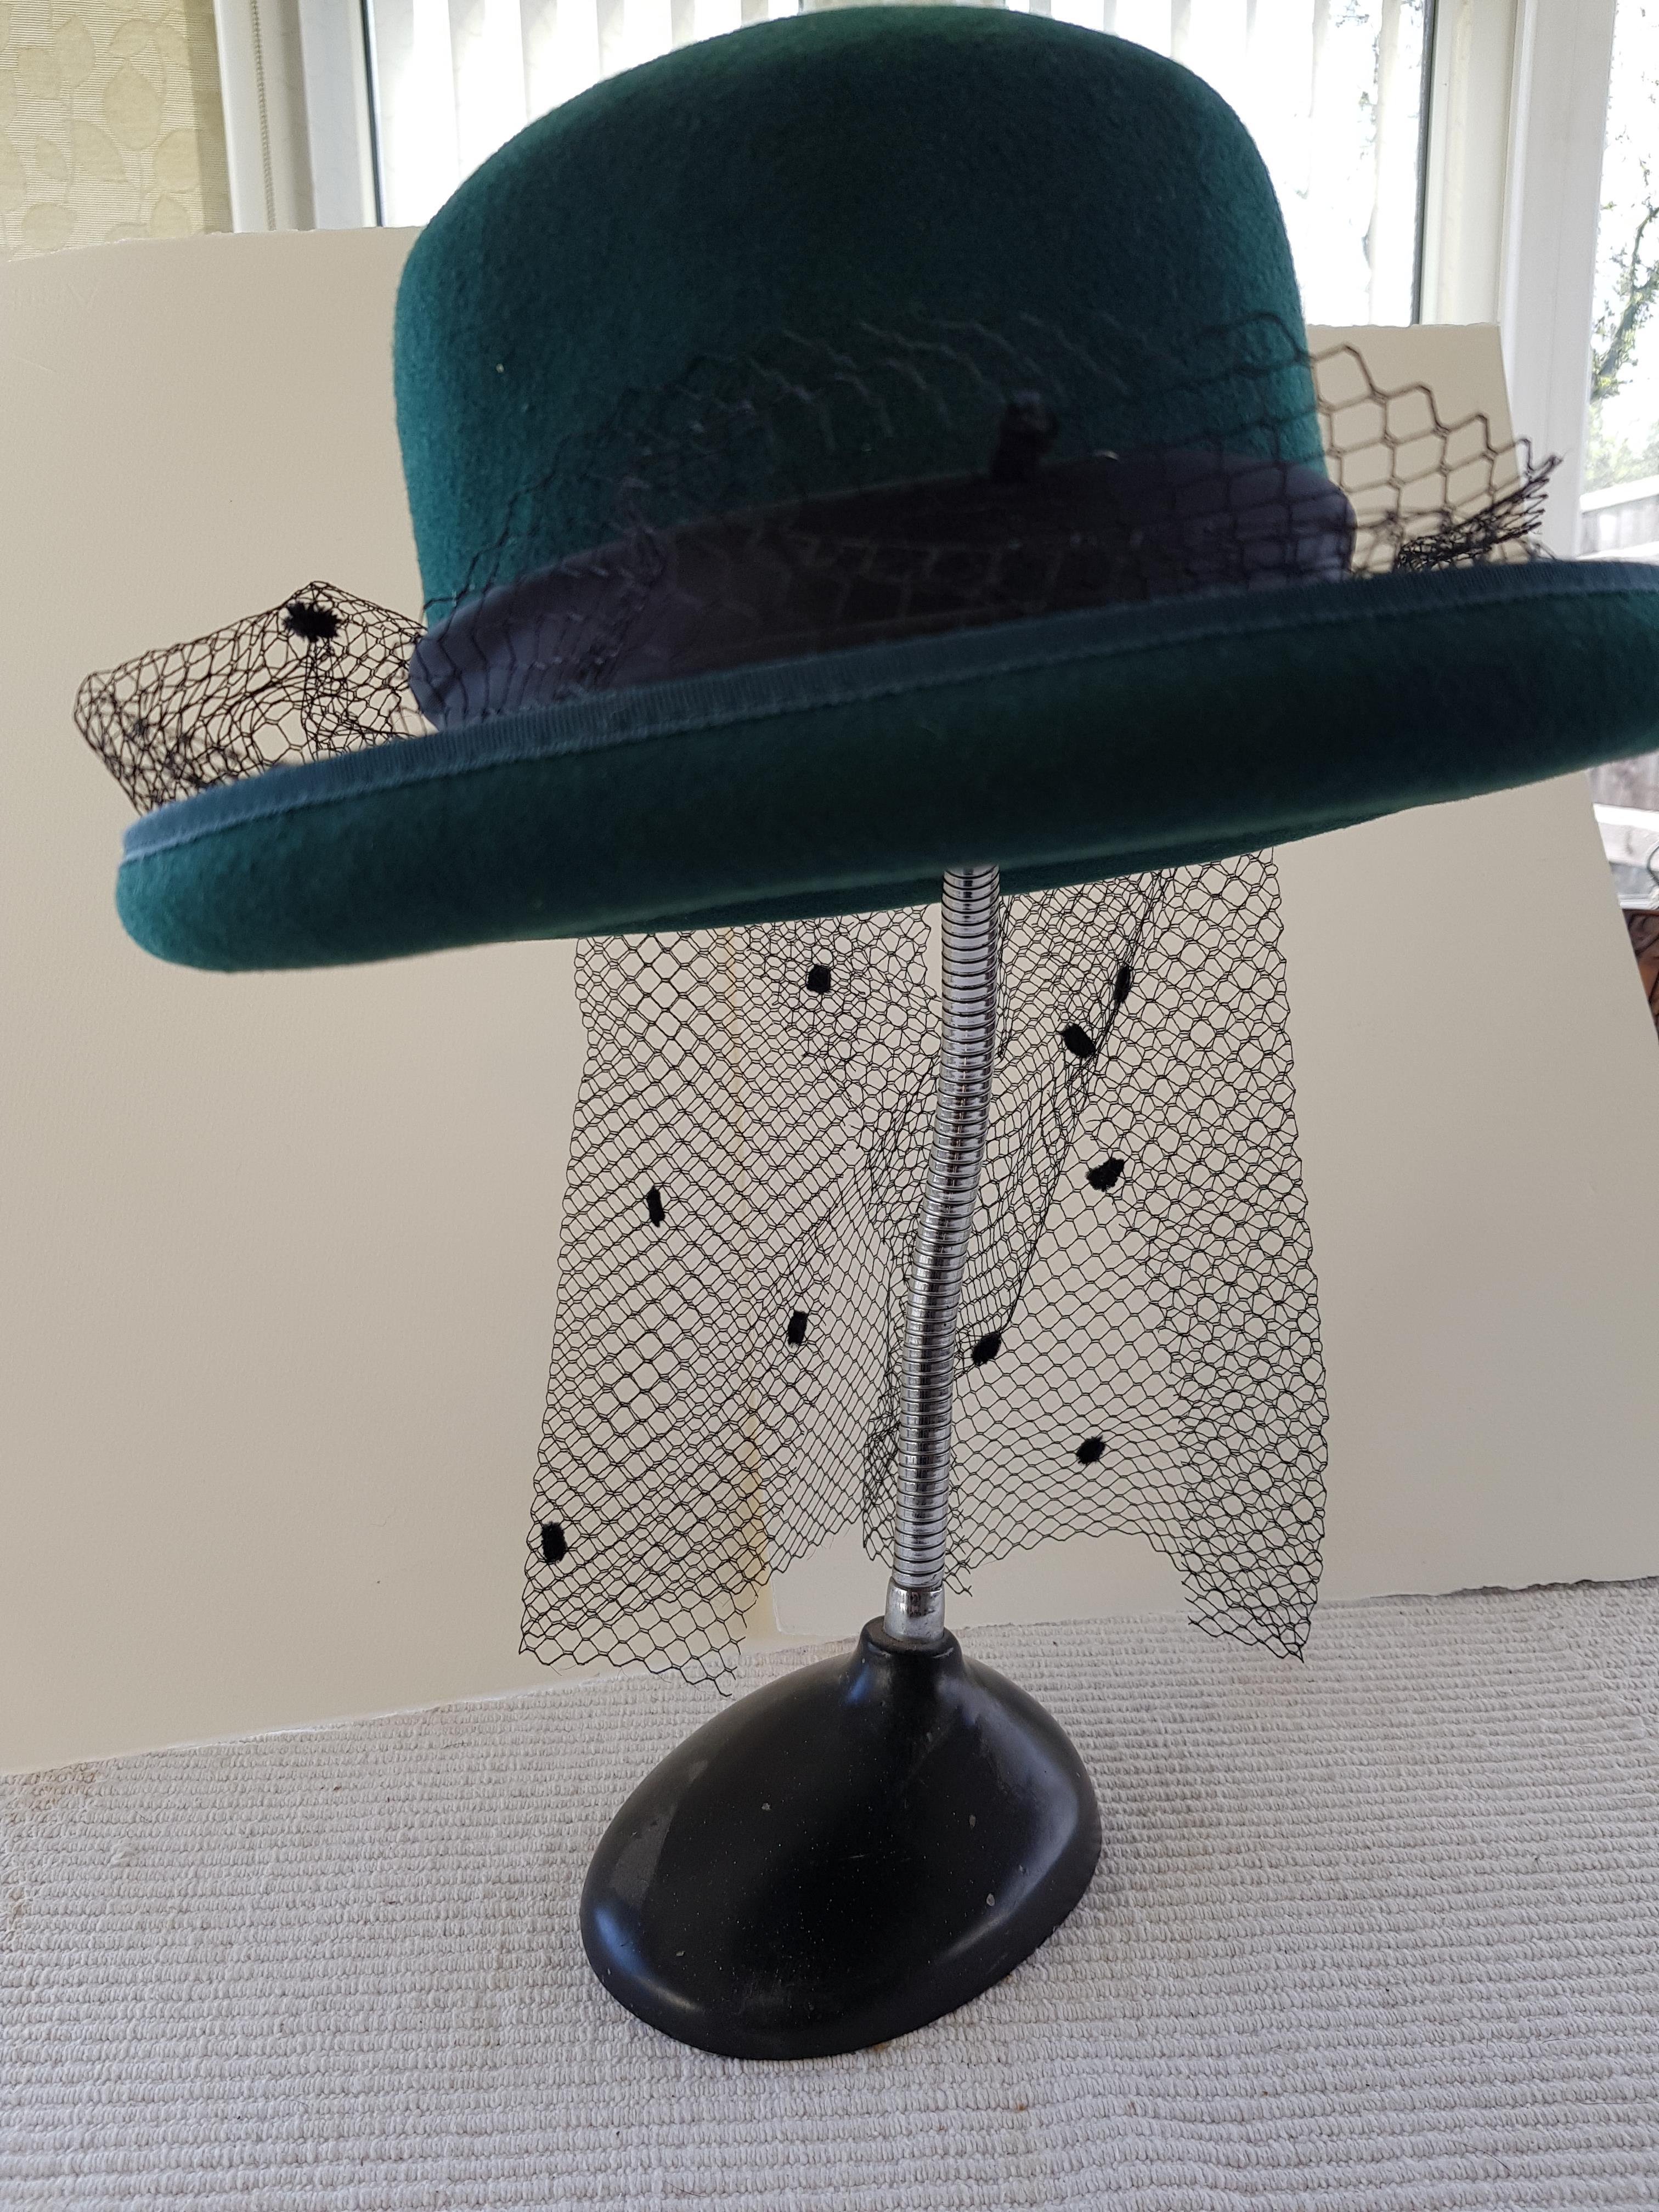 Vintage Concours D'elegance Ladies Hat. - Image 2 of 4